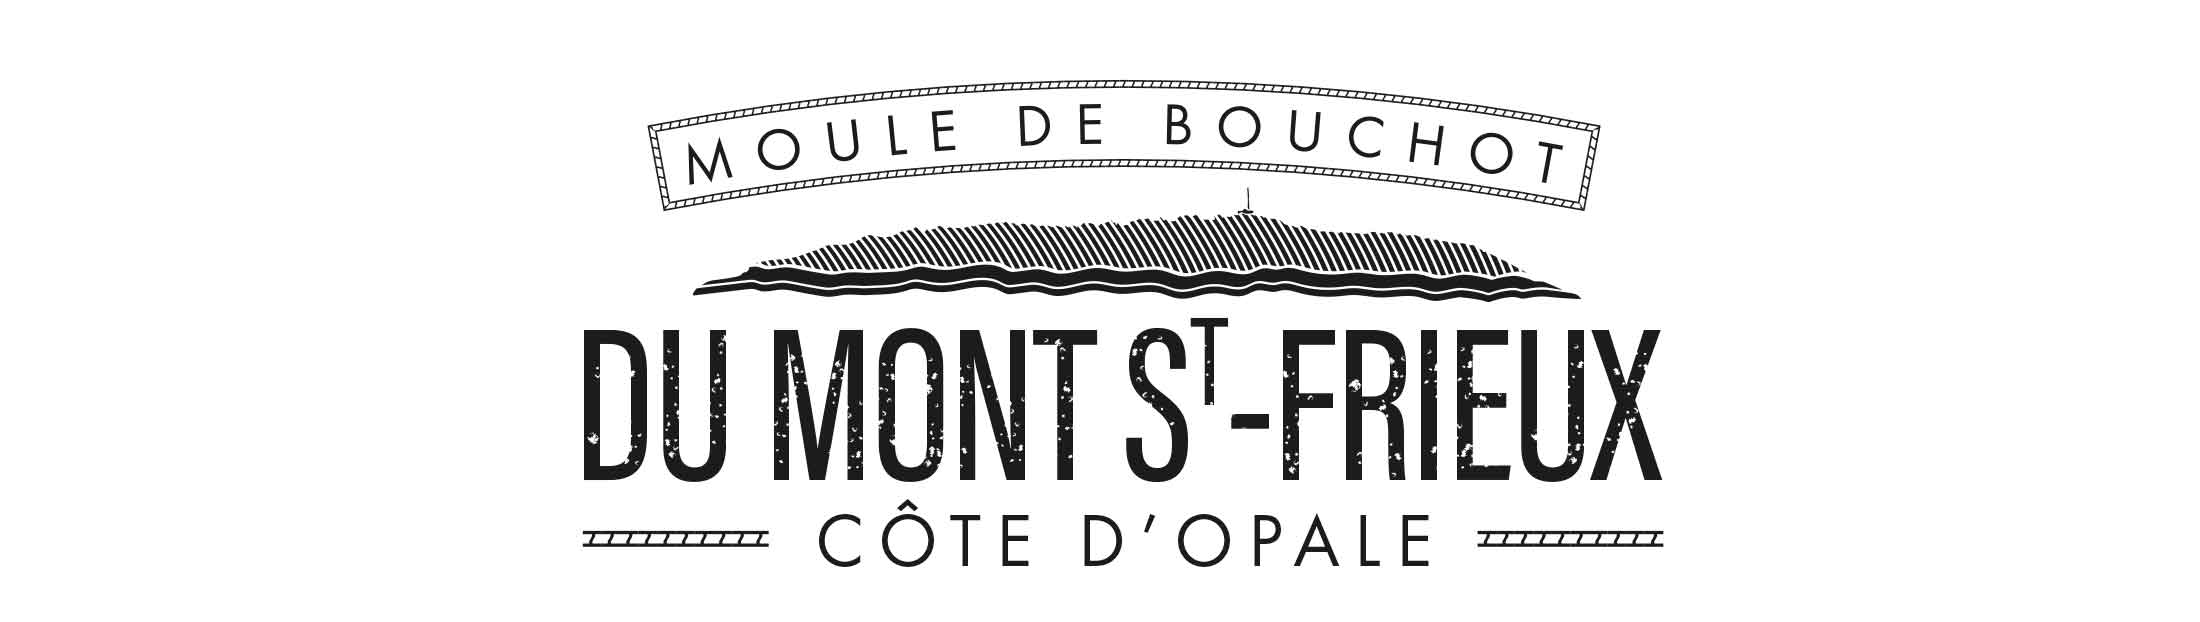 logo-moules-bouchot-2